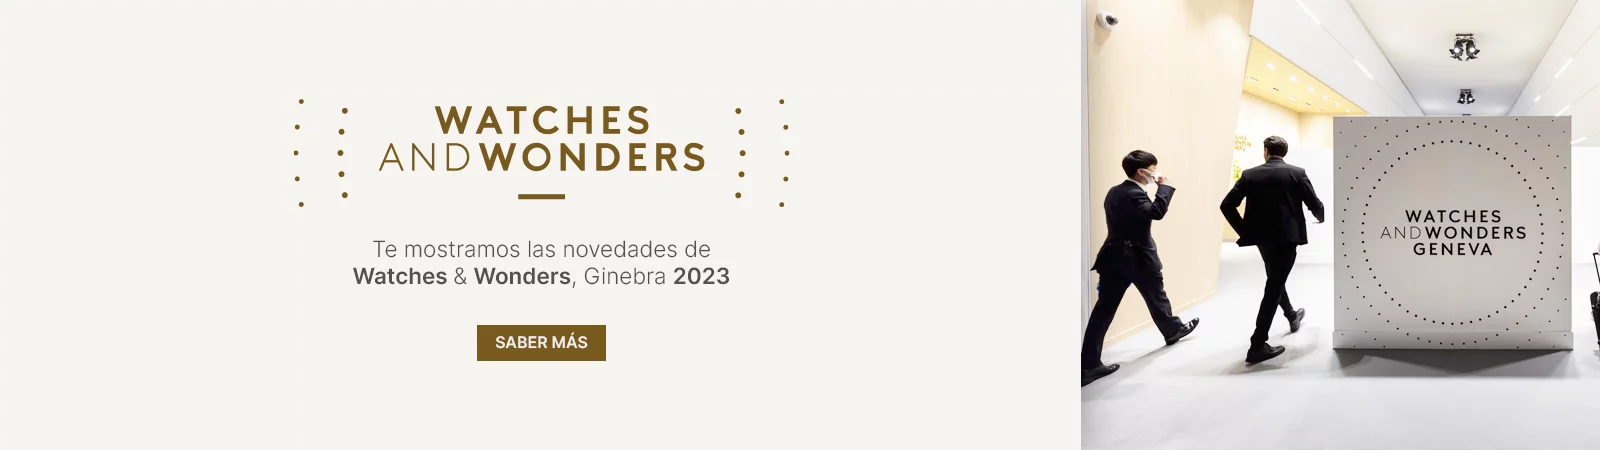 Novedades de Watches and Wonders Ginebra Geneva 2023